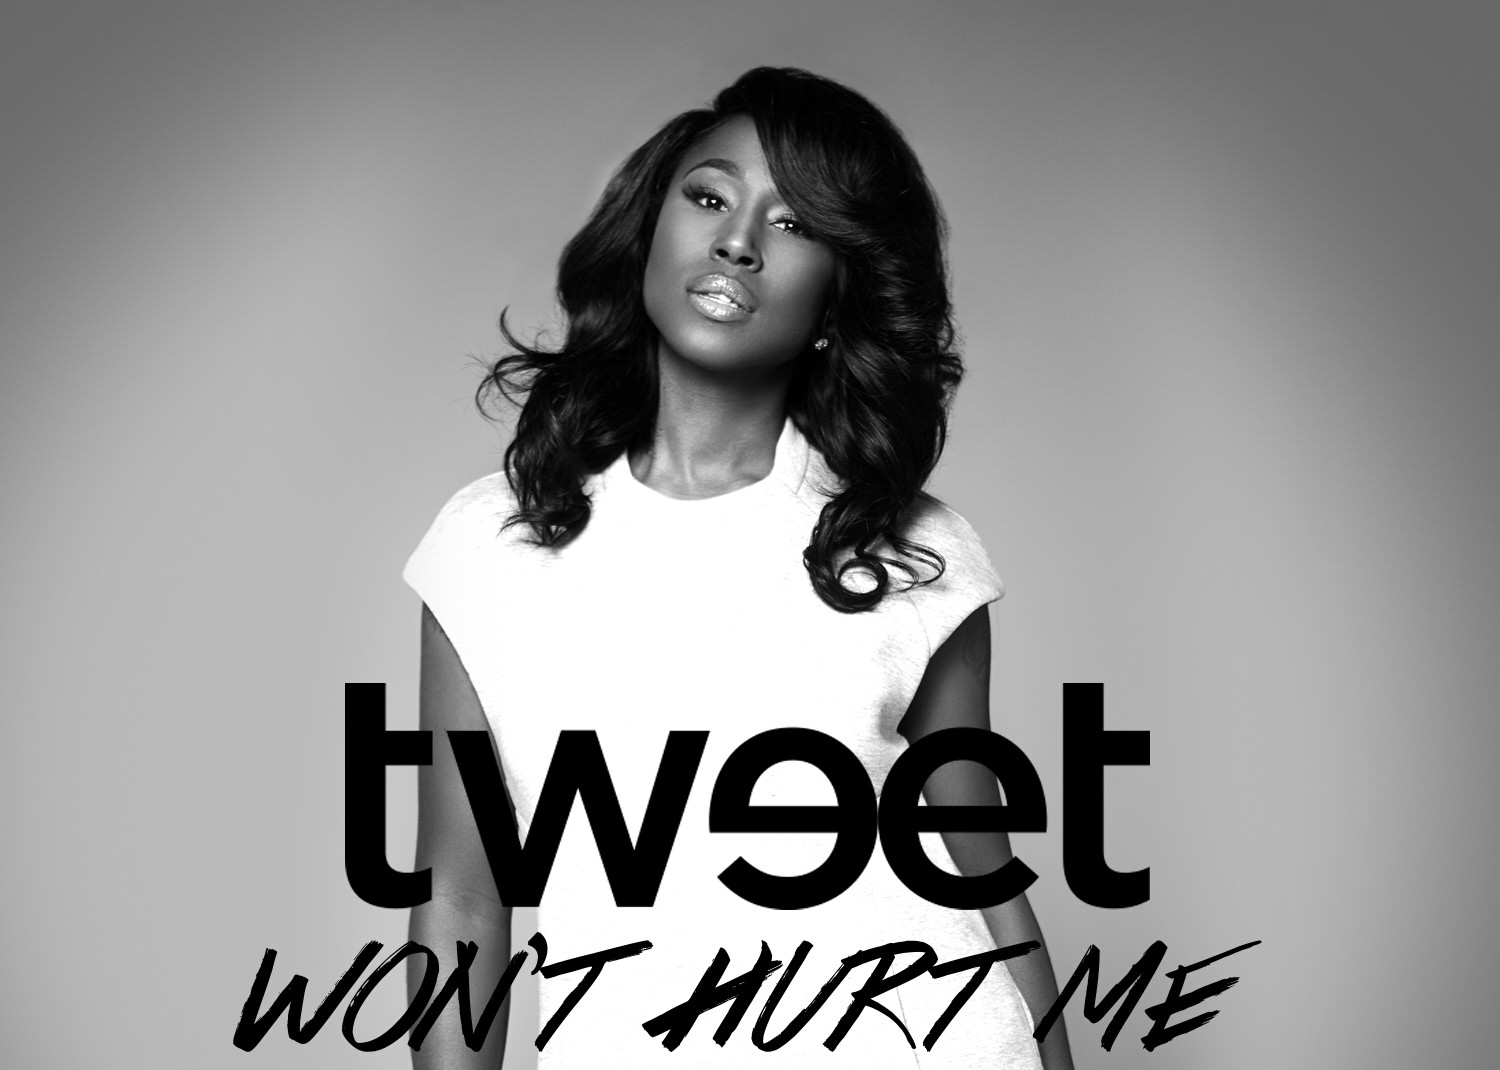 New Music: Tweet "Won't Hurt Me"